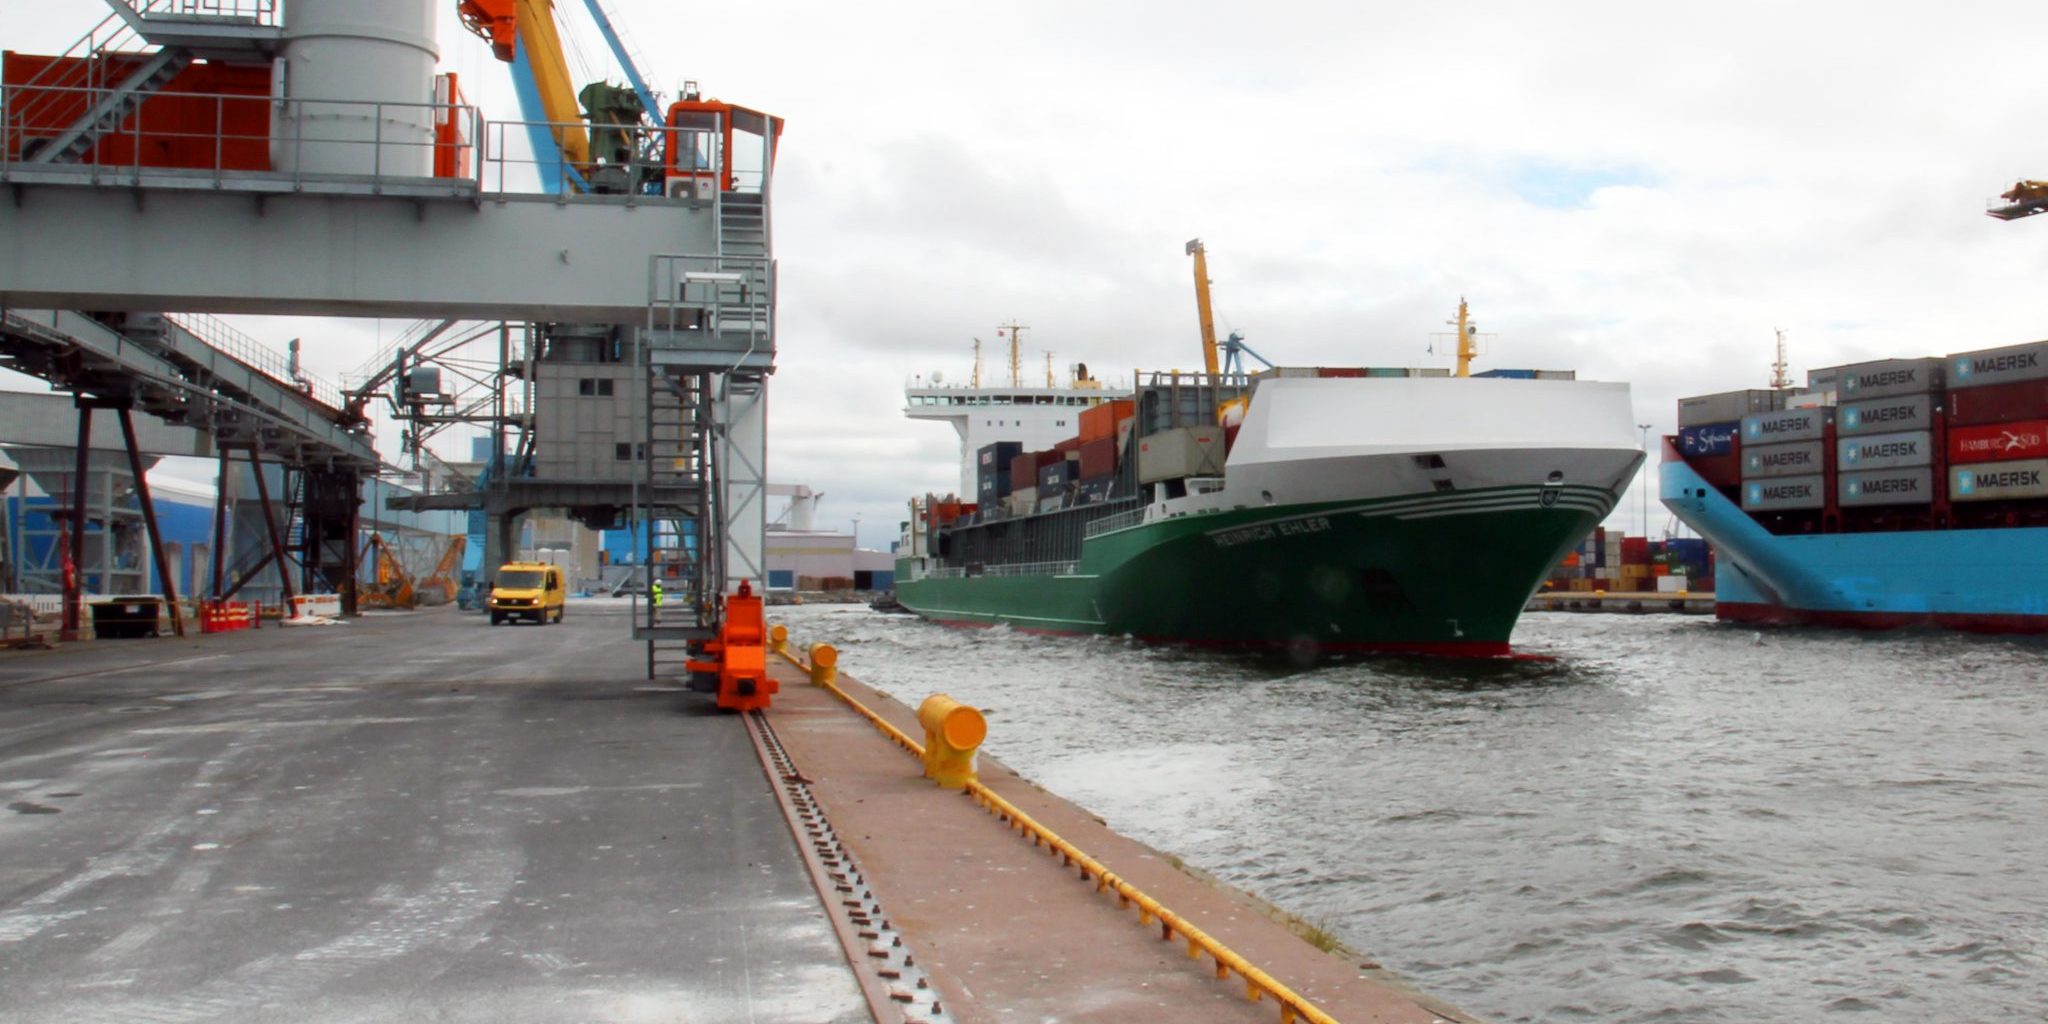 Cargo ship arriving in the port of Gävle.